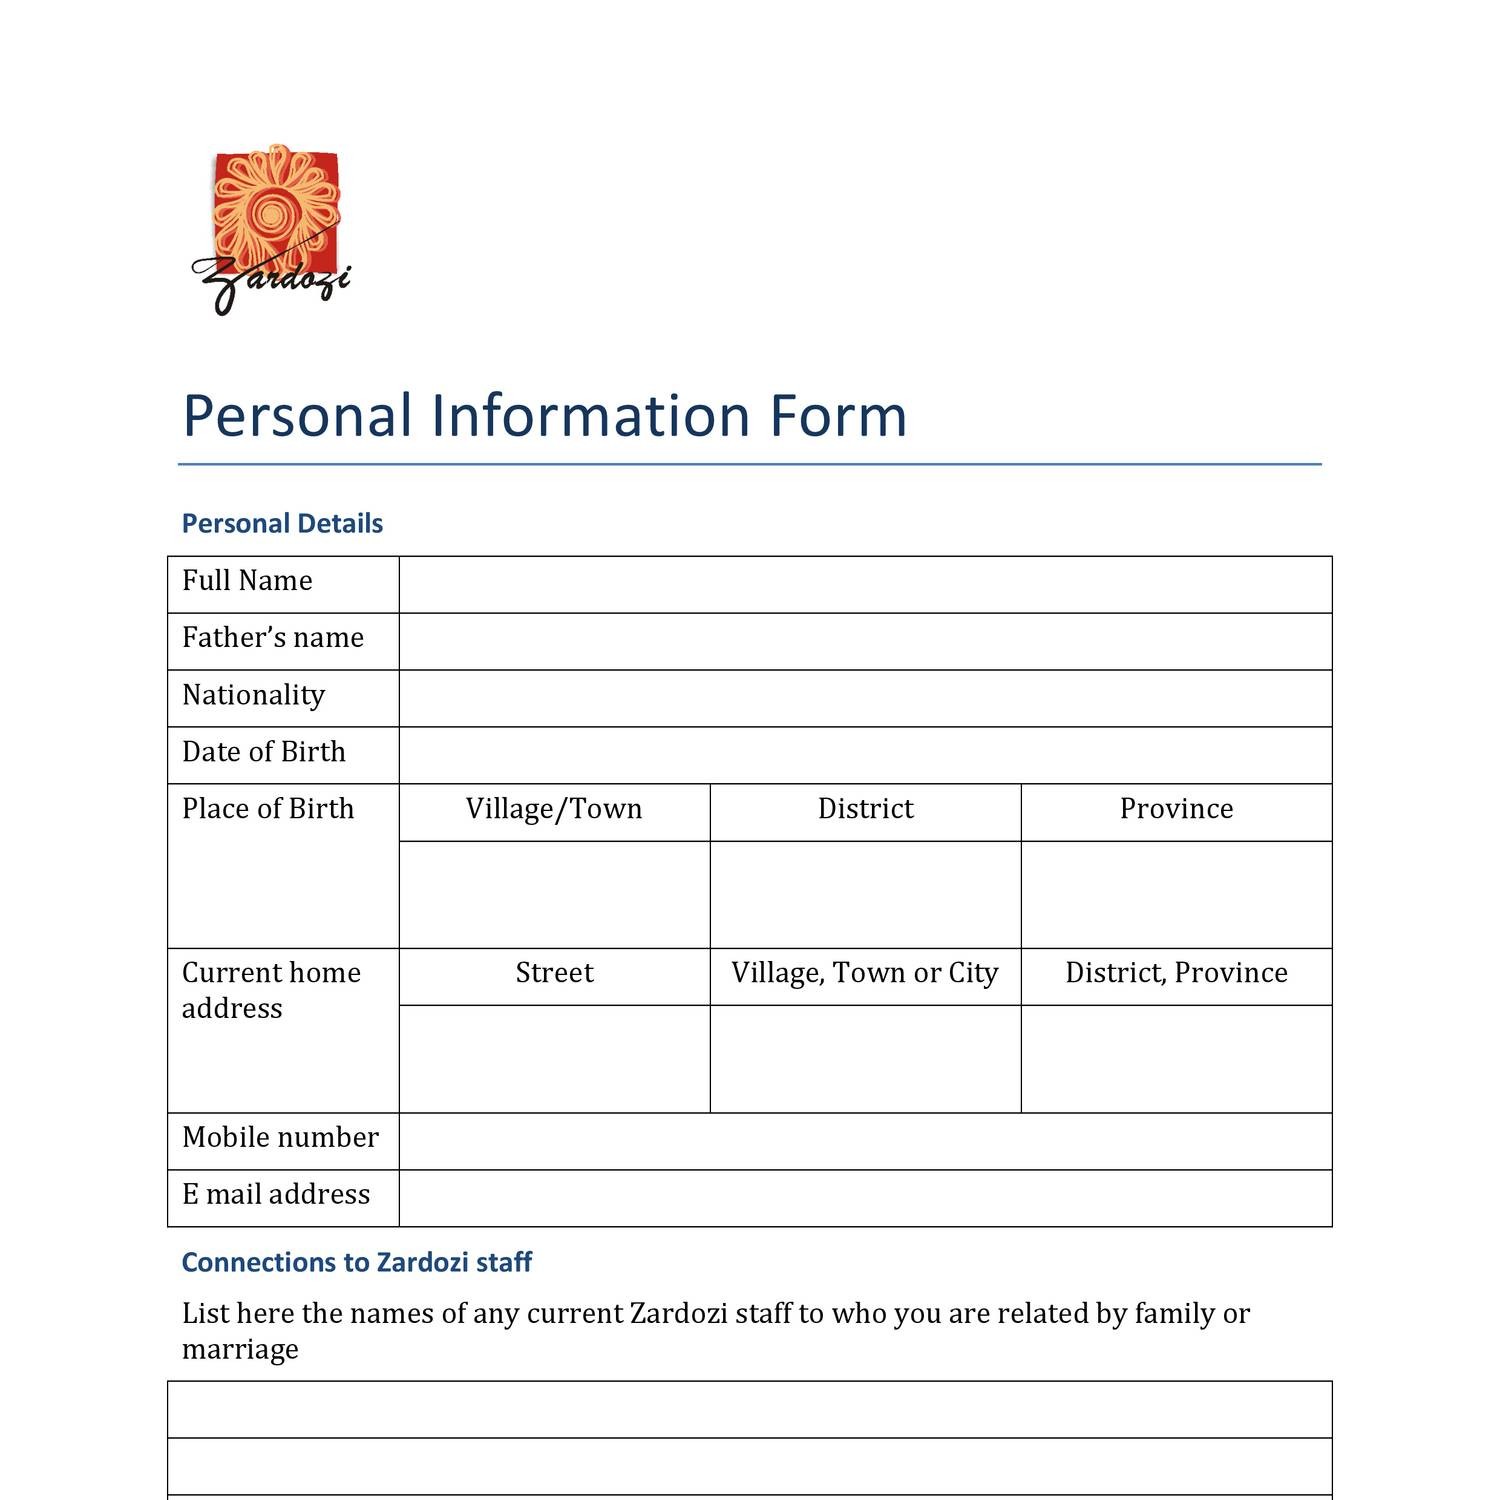 form-4-5-personal-information-form-pdf-docdroid-photos-vrogue